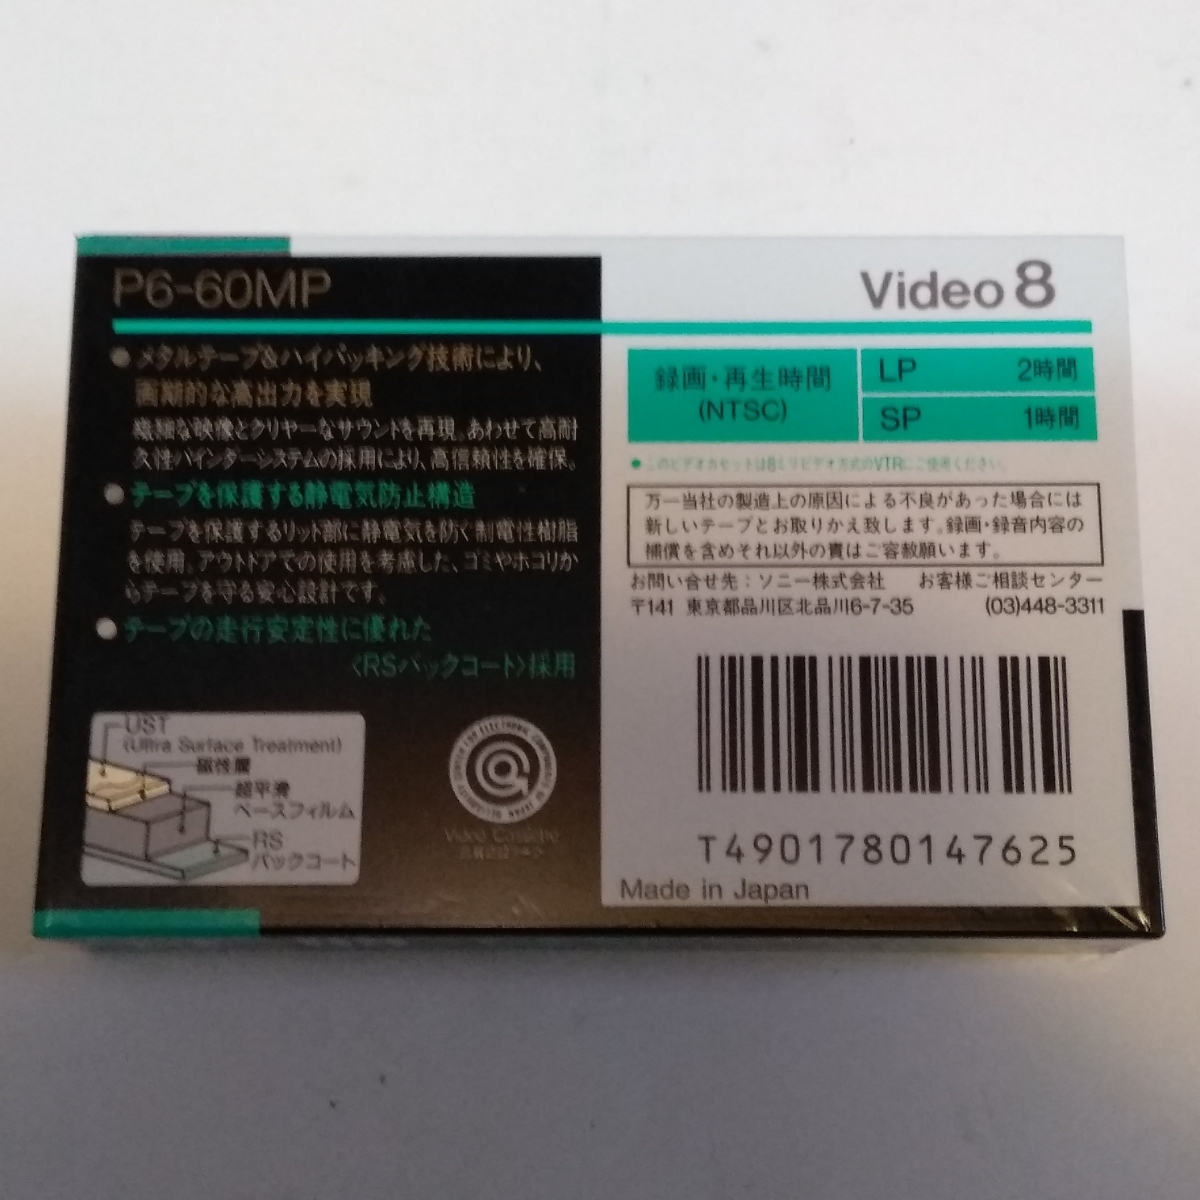 8 millimeter videotape METAL MP 60 SONY Video8 P6-60MP 2 pcs set 